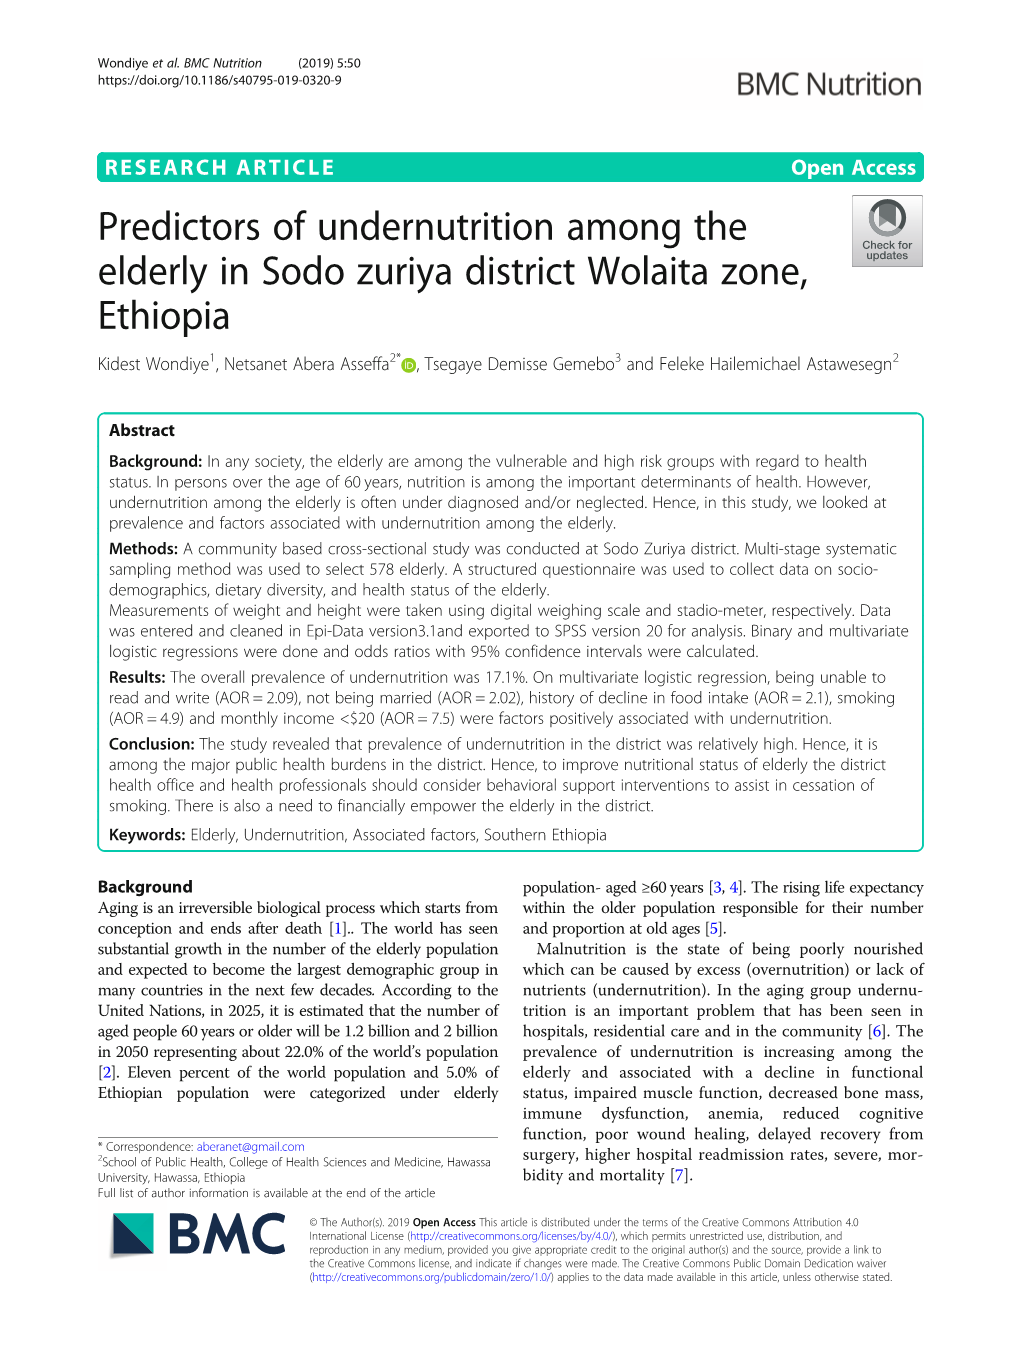 Predictors of Undernutrition Among the Elderly in Sodo Zuriya District